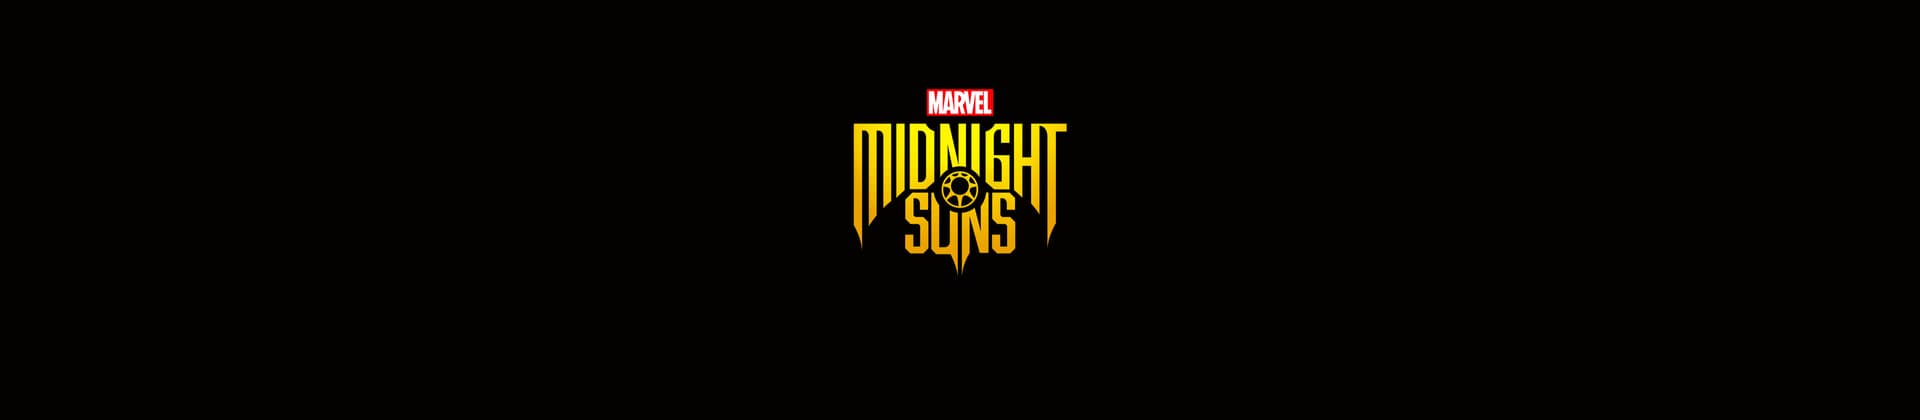 Marvel's Midnight Suns Game Logo on Black